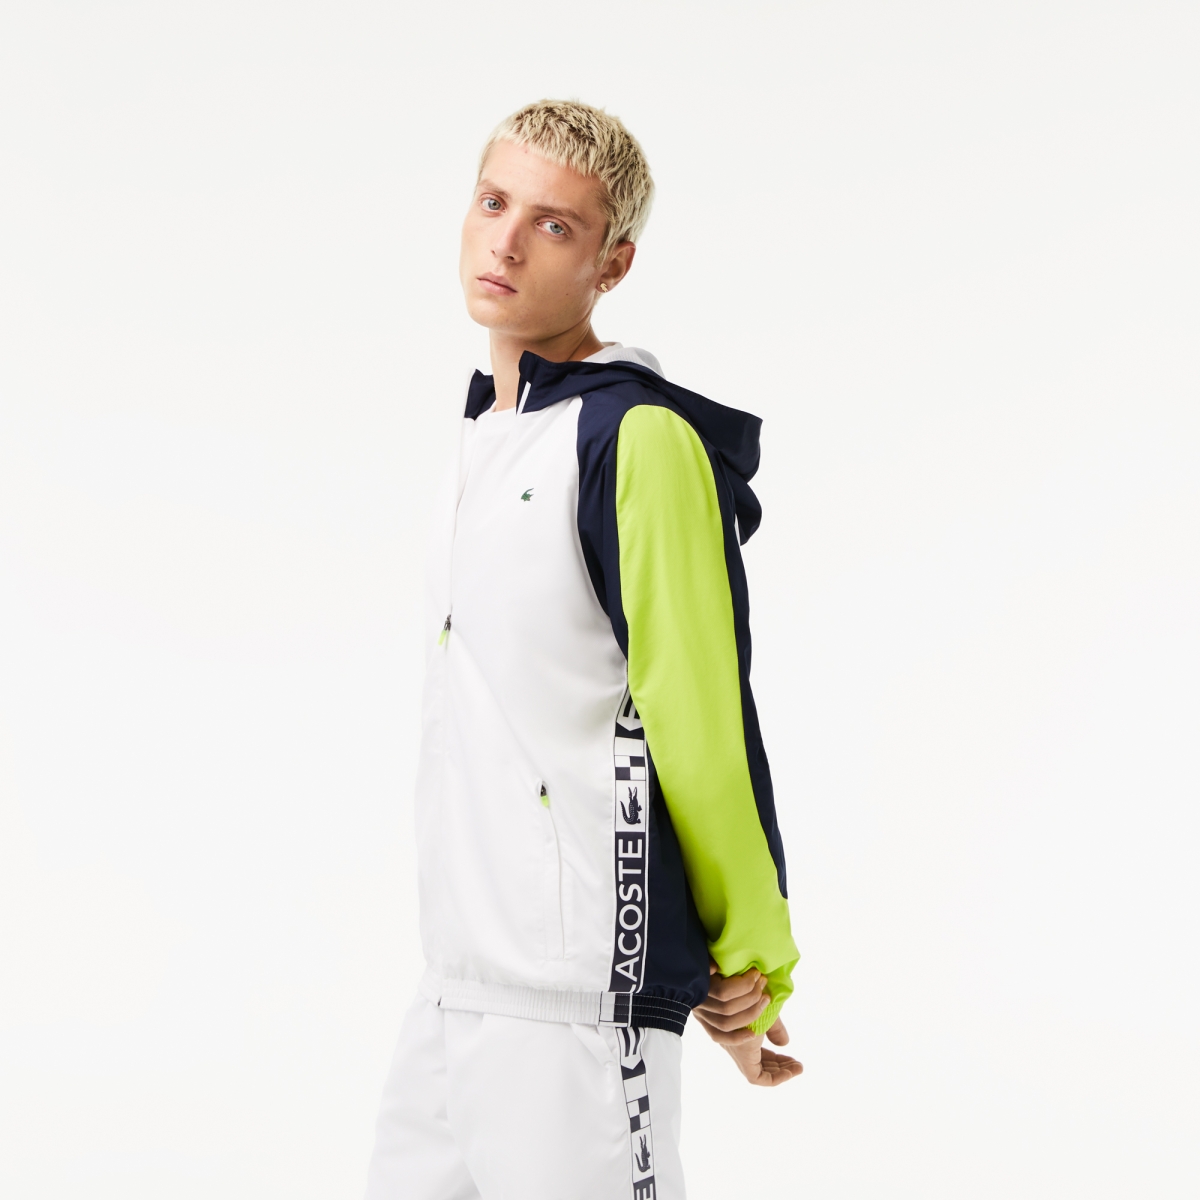 Mens Tennis Adidas Jackets - Buy Mens Tennis Adidas Jackets online in India